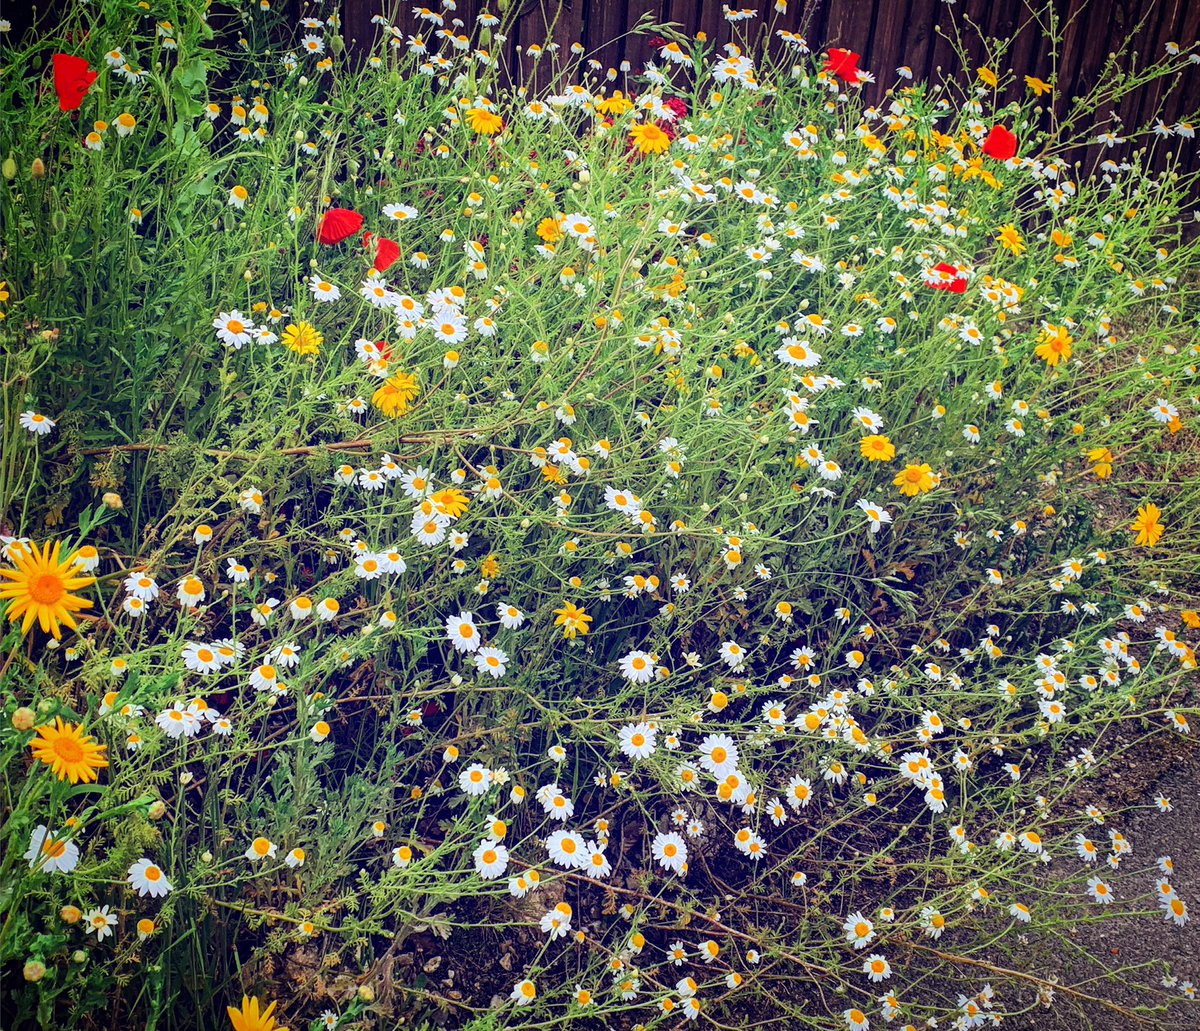 Wildflower explosion 😍😍 #goldenragwort #oxeyedaisy #oxeyedaisies #poppies #wildflower #wild #beauty #blooming #summerflowers #delicate #green #flowersofinstagram #abundance #chaotic